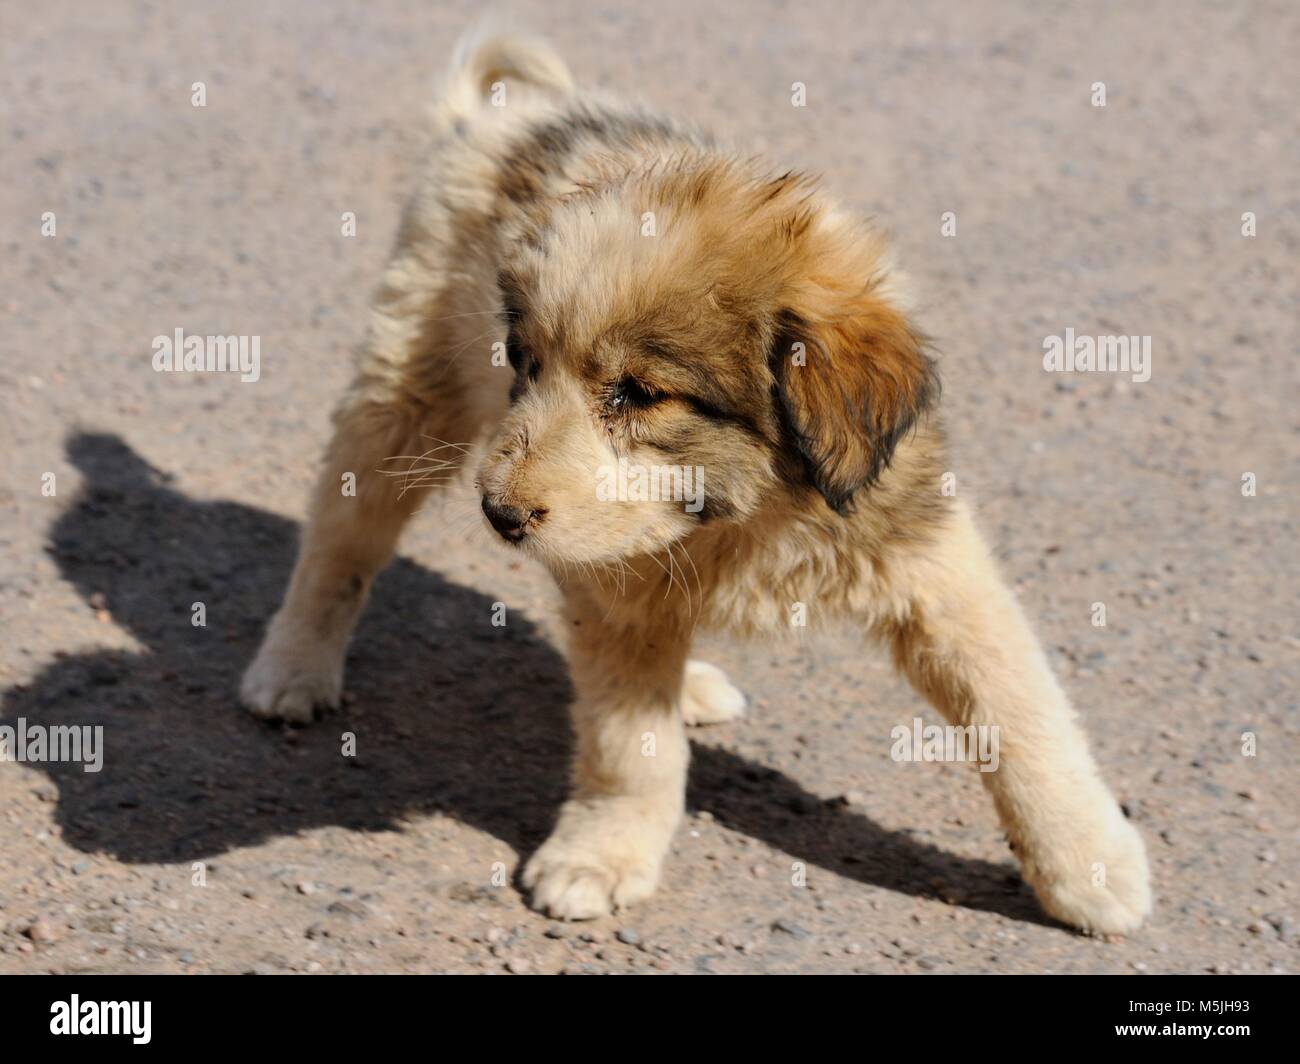 A cute puppy is taking its first steps, Aqaba, Jordan Stock Photo